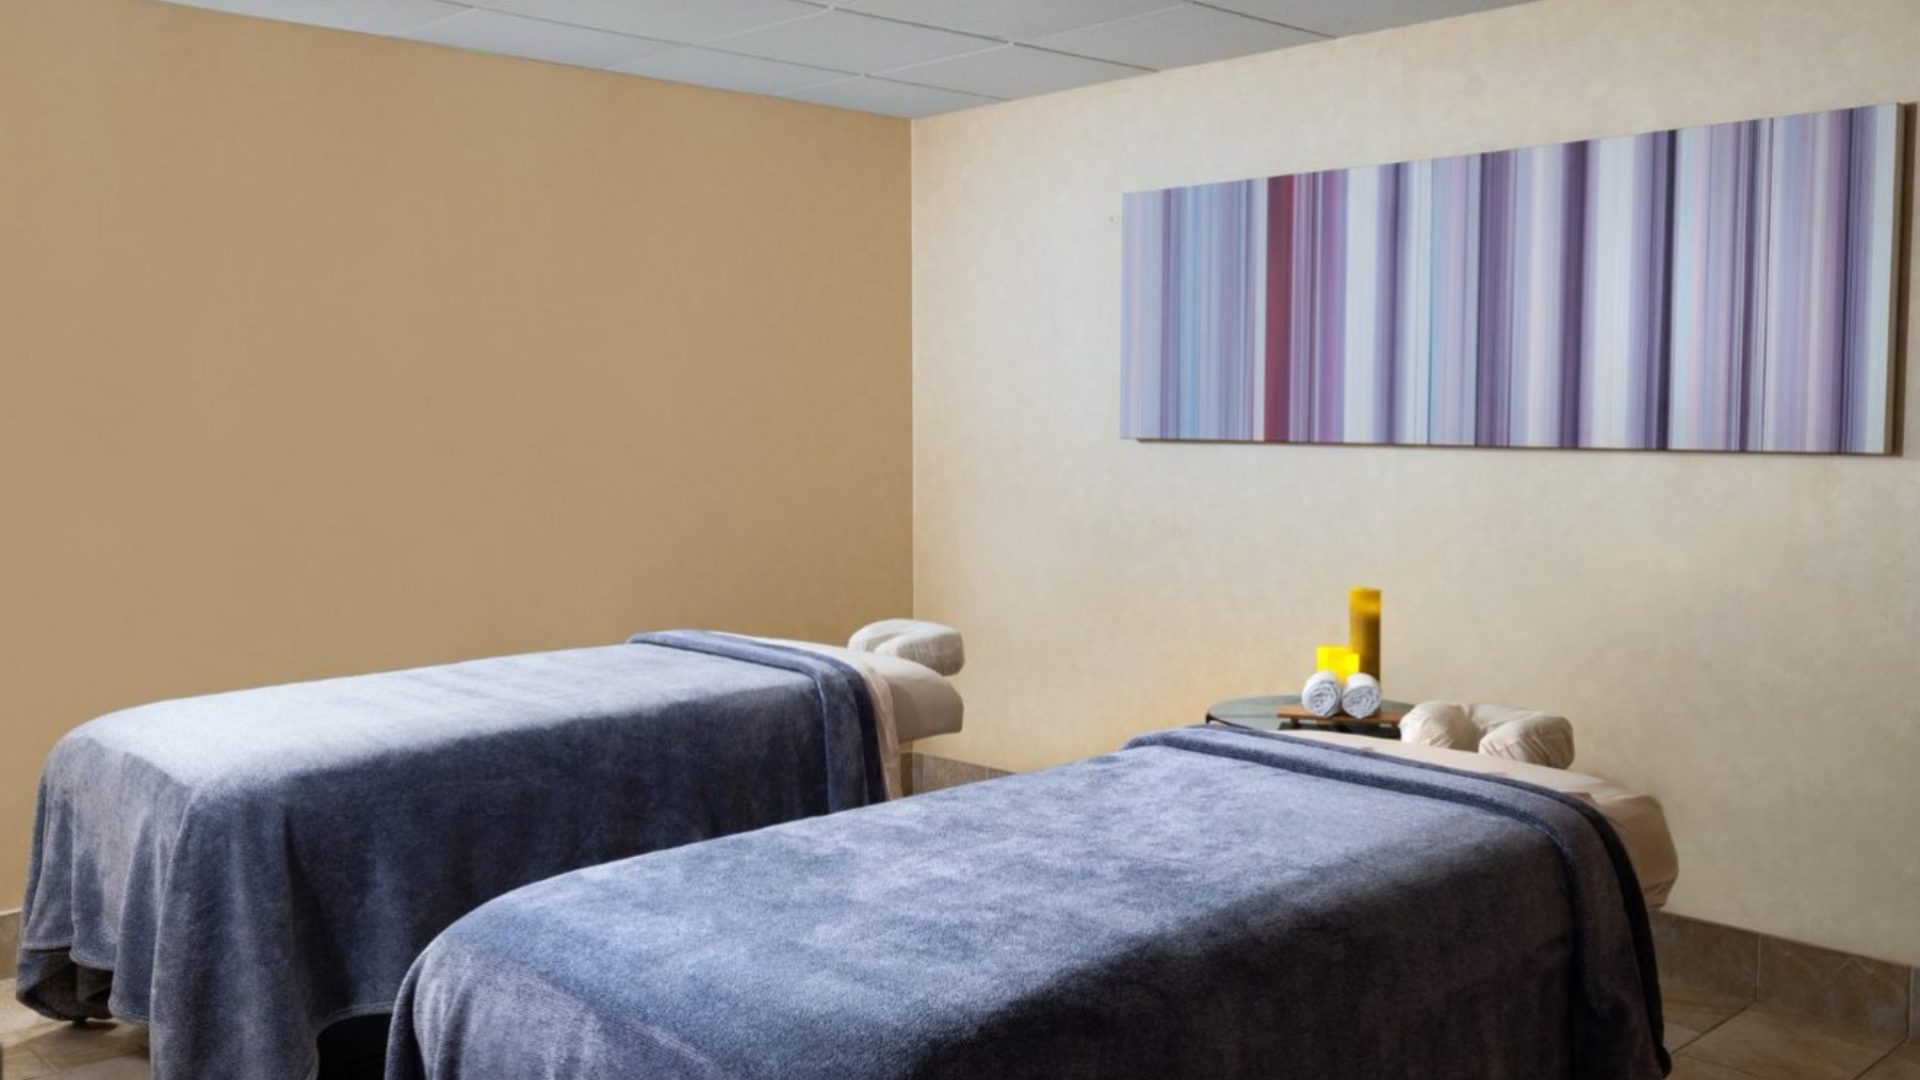 Skyline Spa & Health Club - Treatment Room